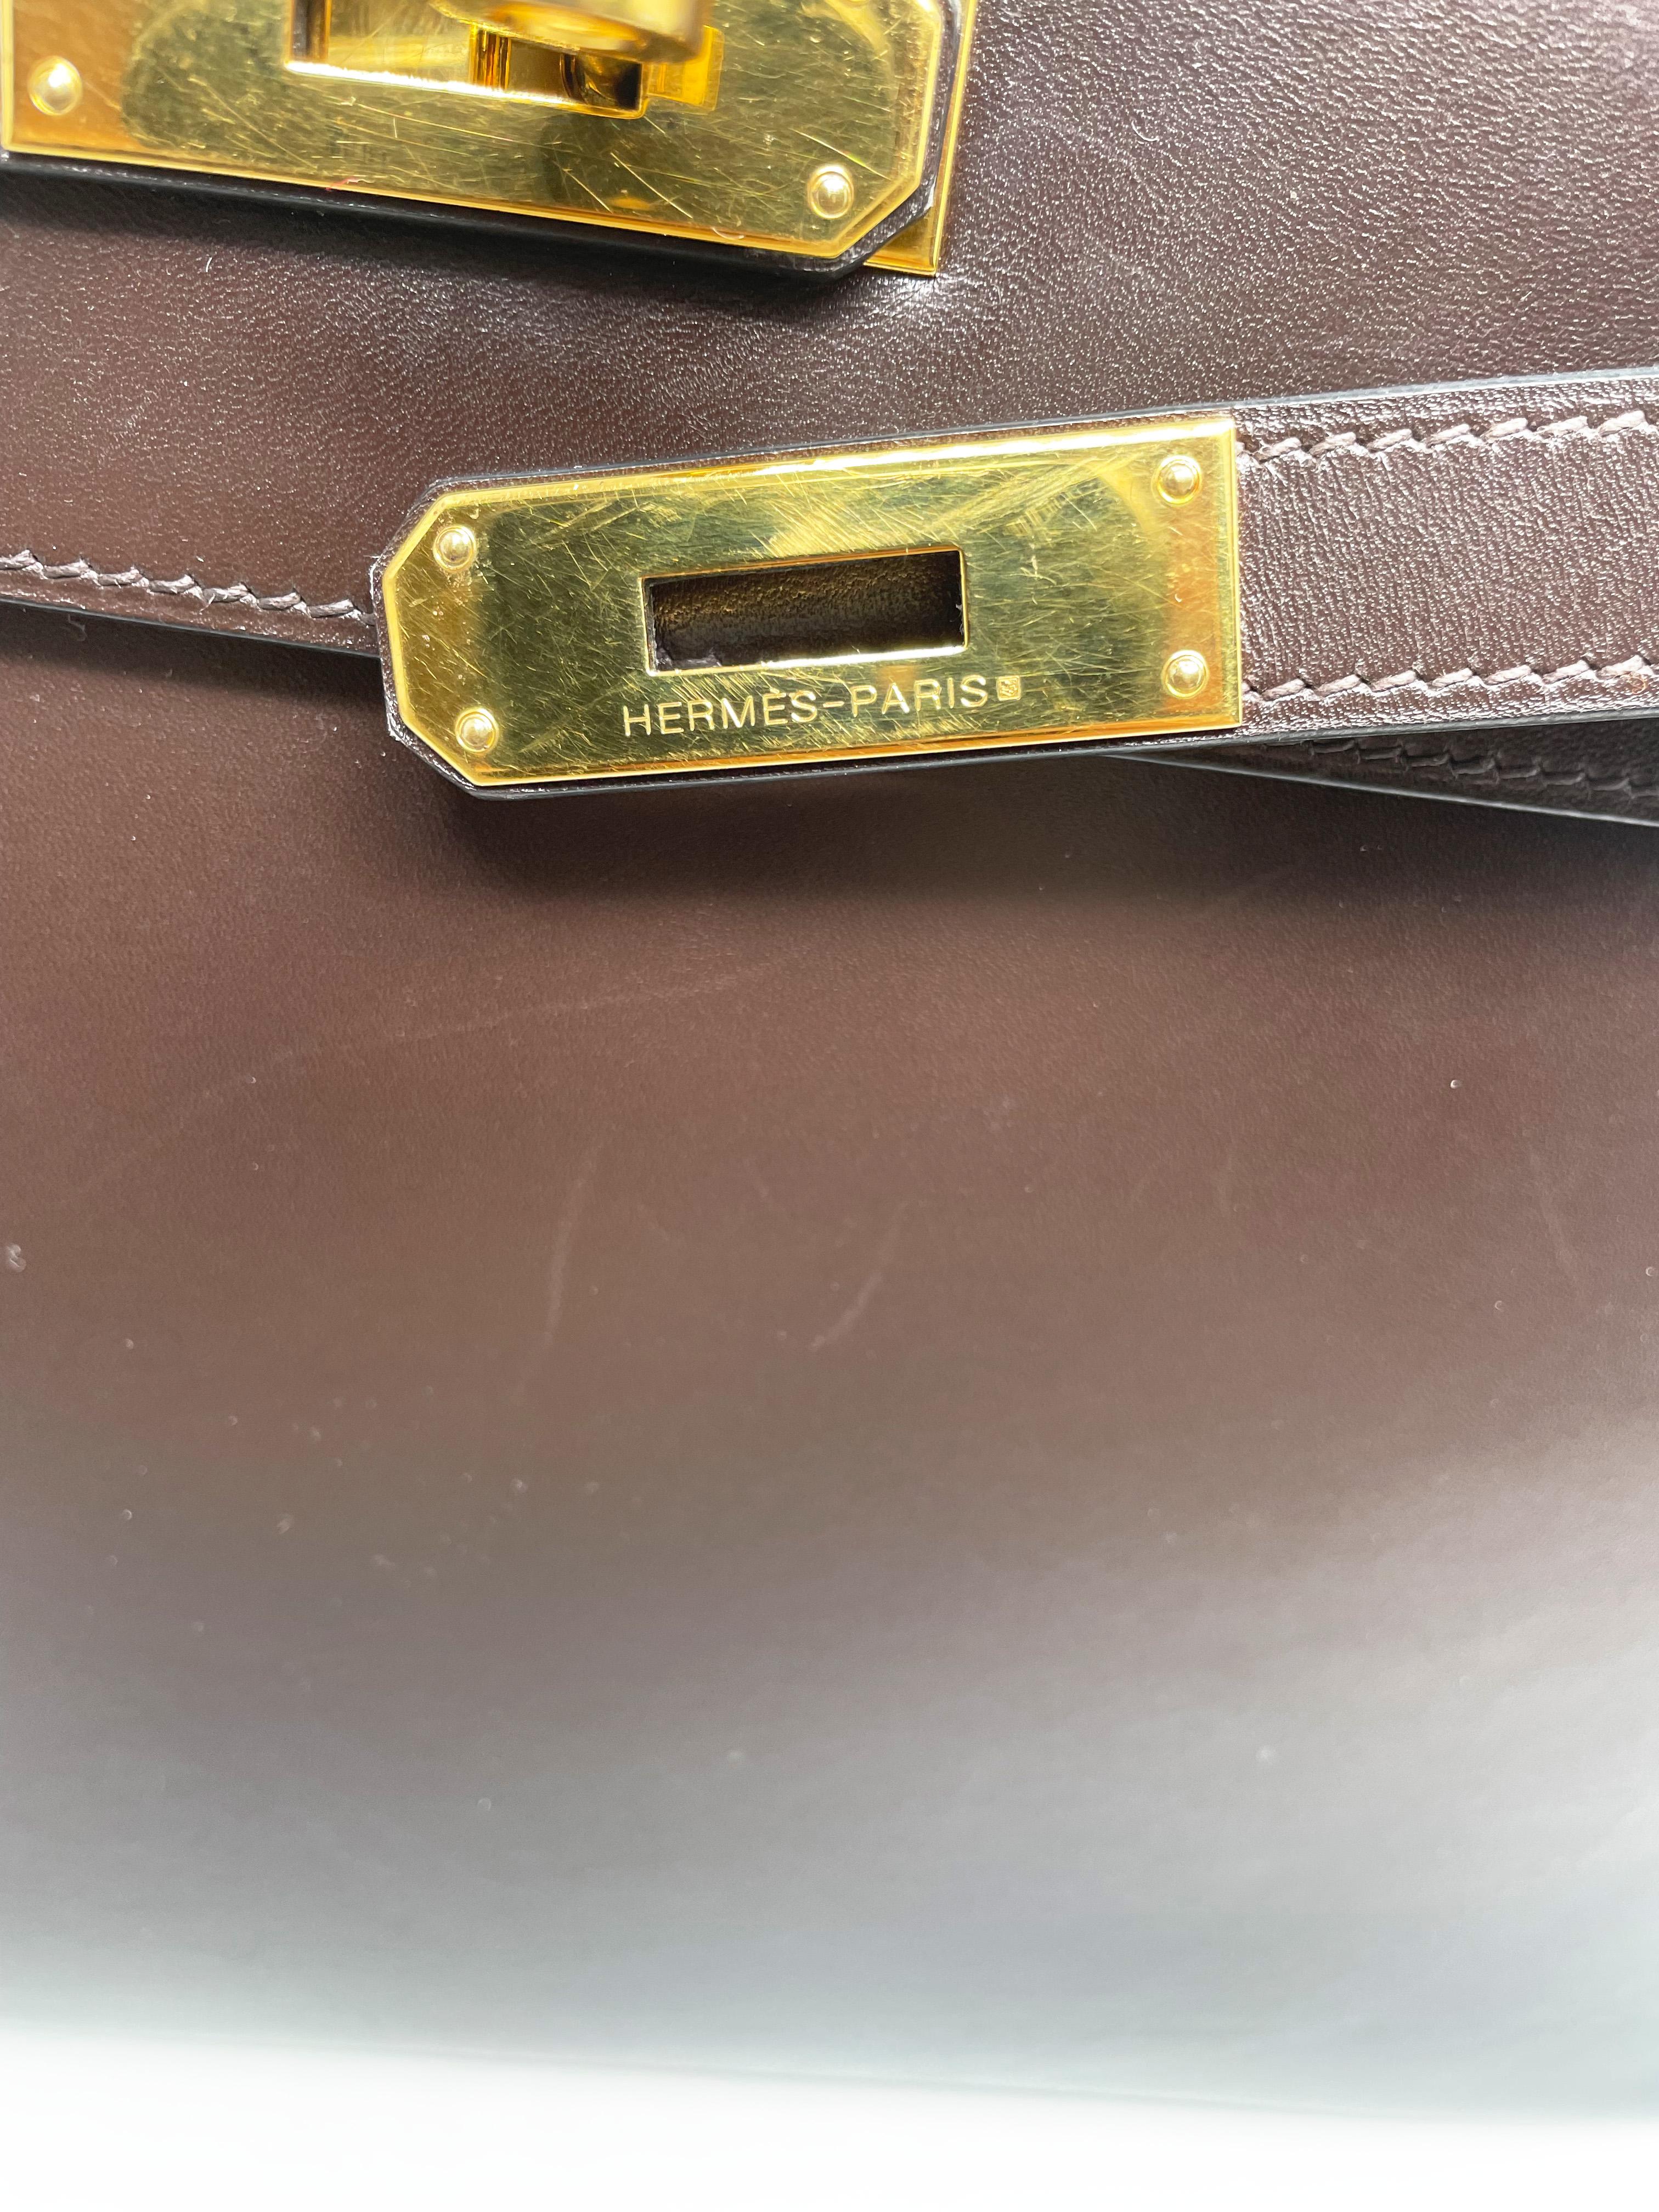 Superb Hermès Kelly saddler handbag 32 cm in brown box 6